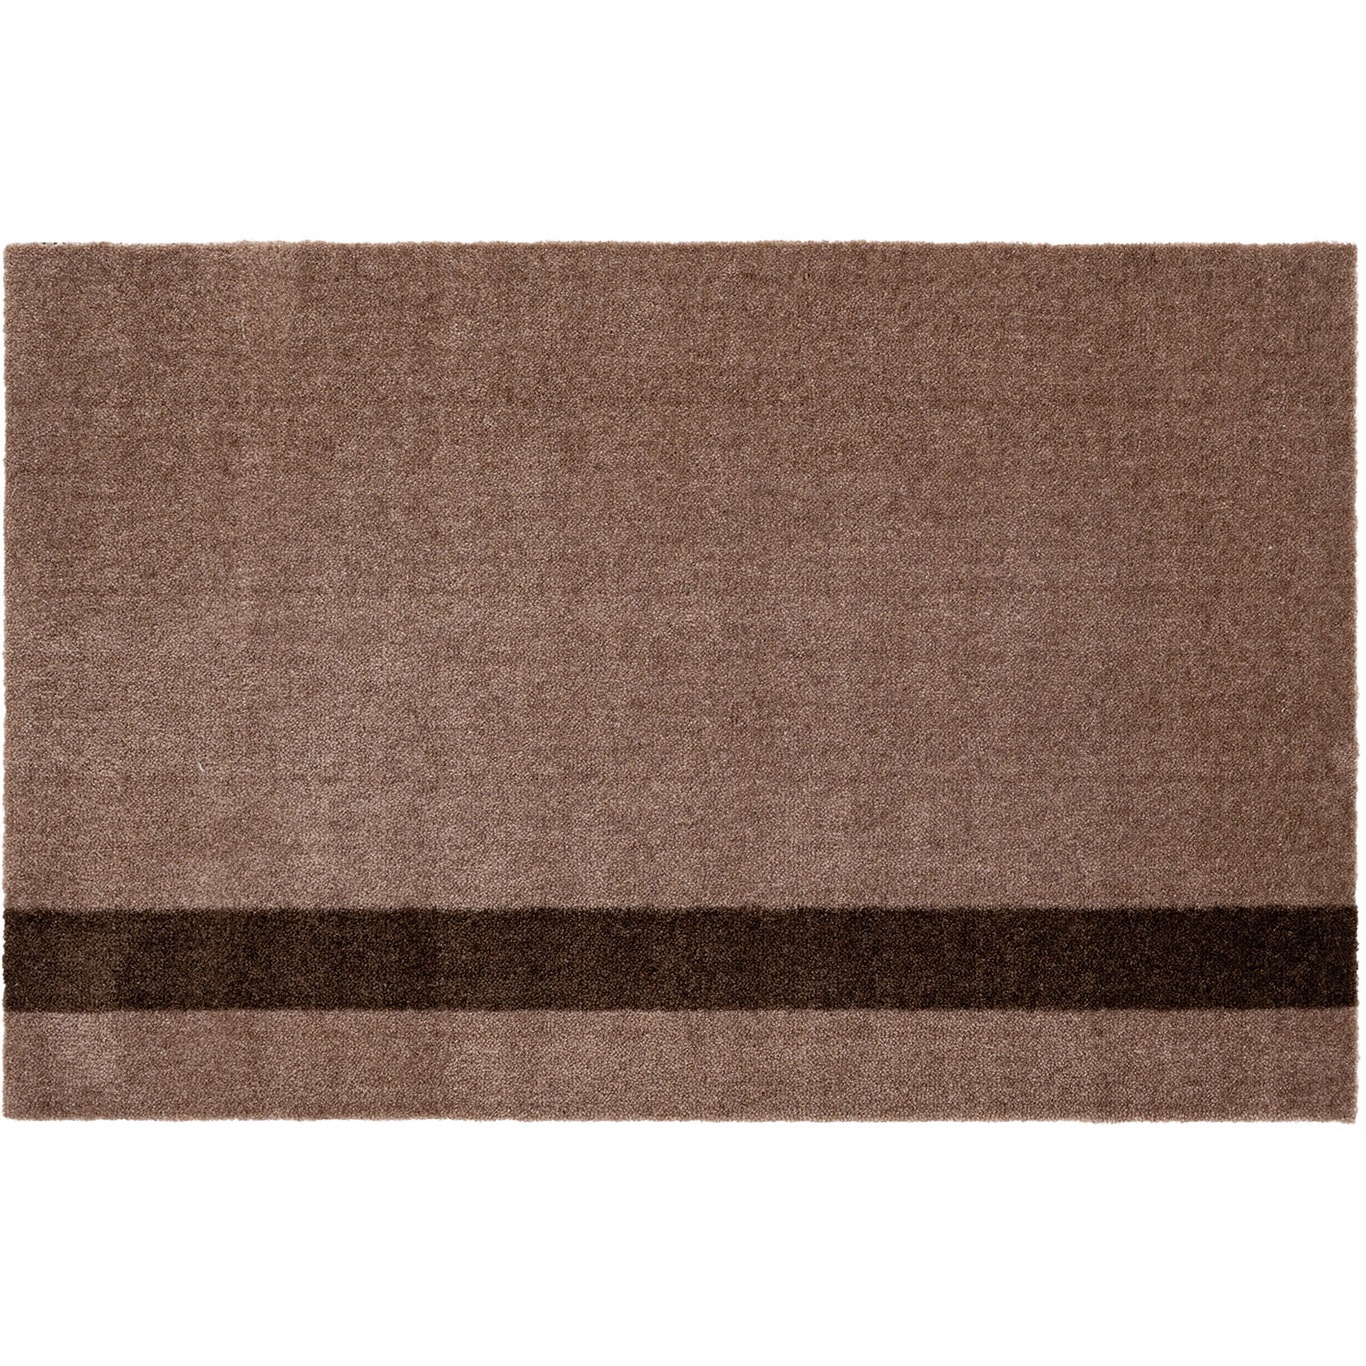 Stripes Teppe Vertikal Sand/Brun, 60x90 cm